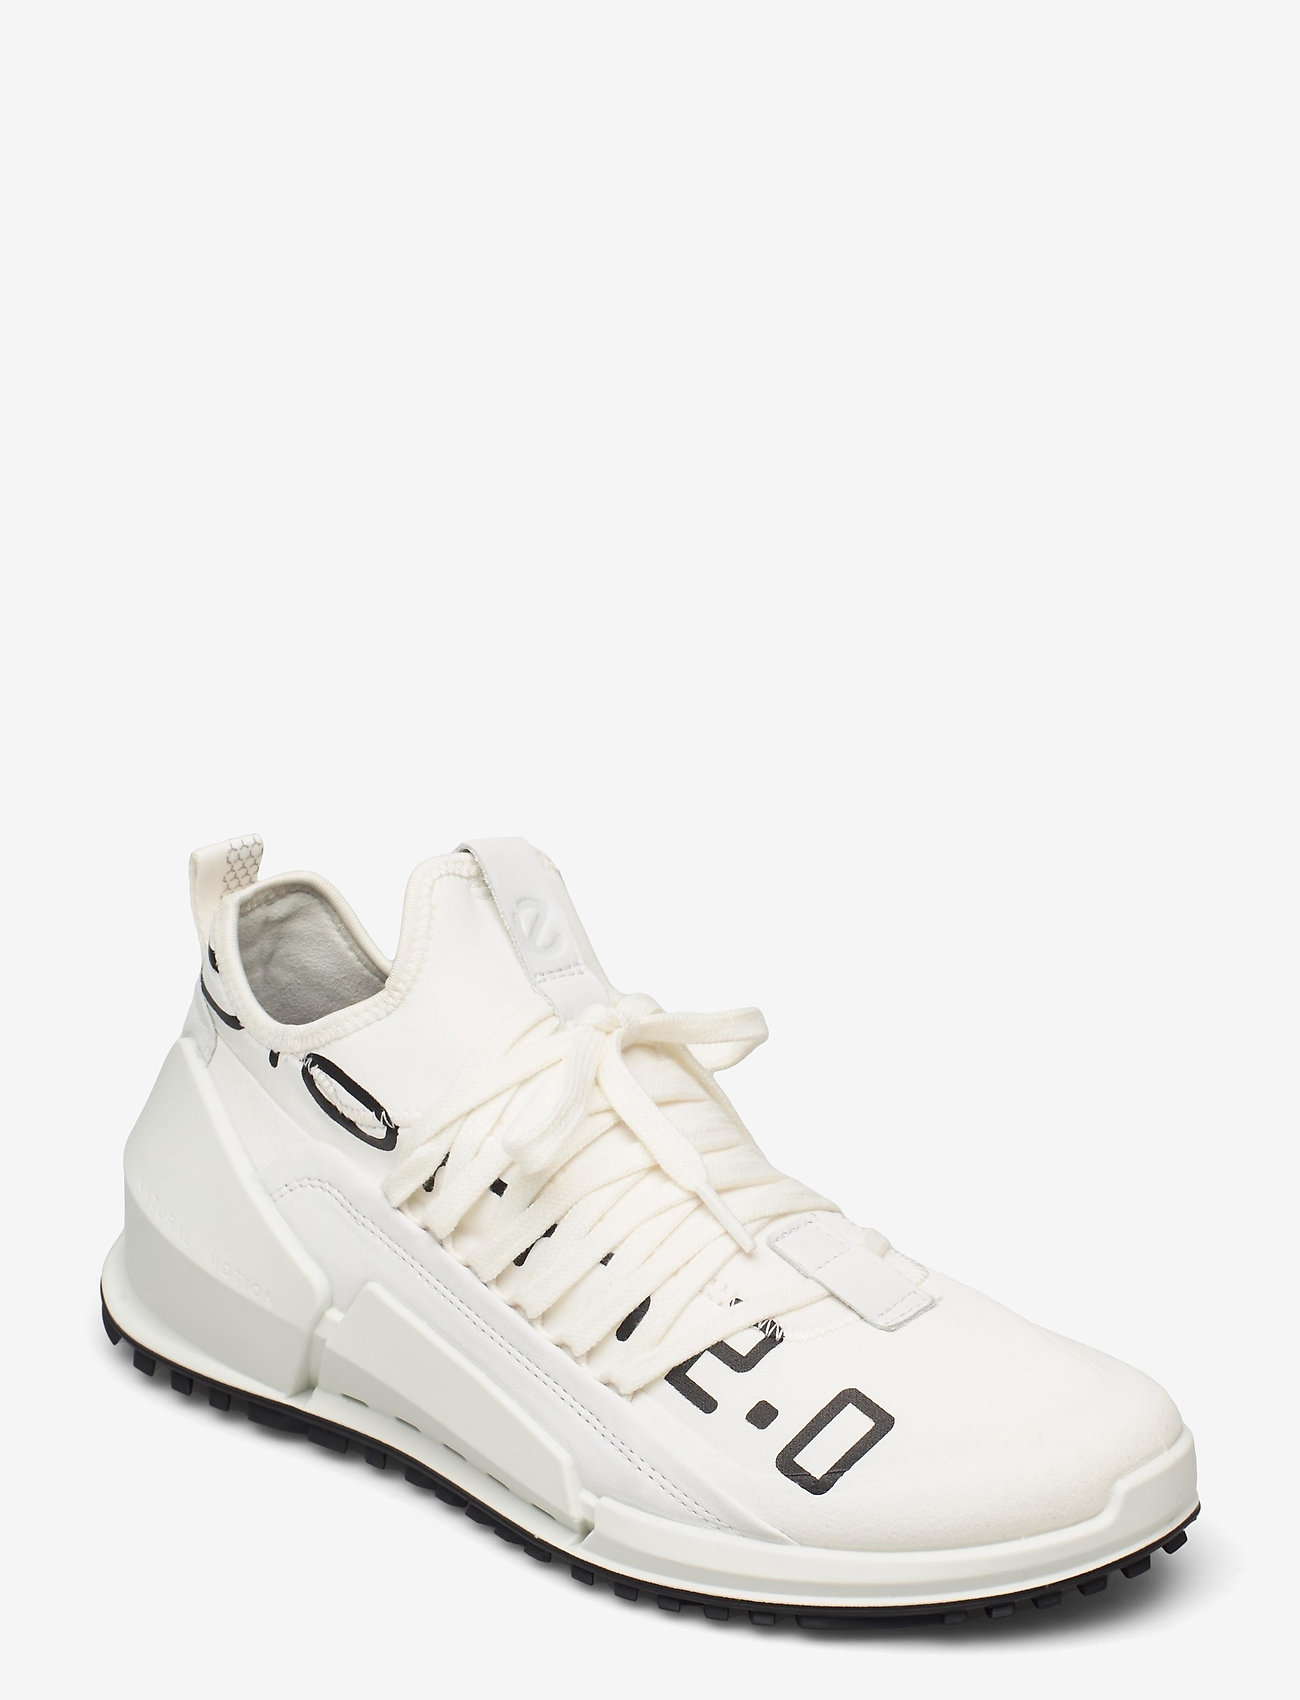 Кроссовки biom 2.0. Ecco Biom 2.0 белые. Ecco Biom белые. Ecco Biom White and Yellow Sneakers. Ecco Biom 2.0 , белые размер штризкод.